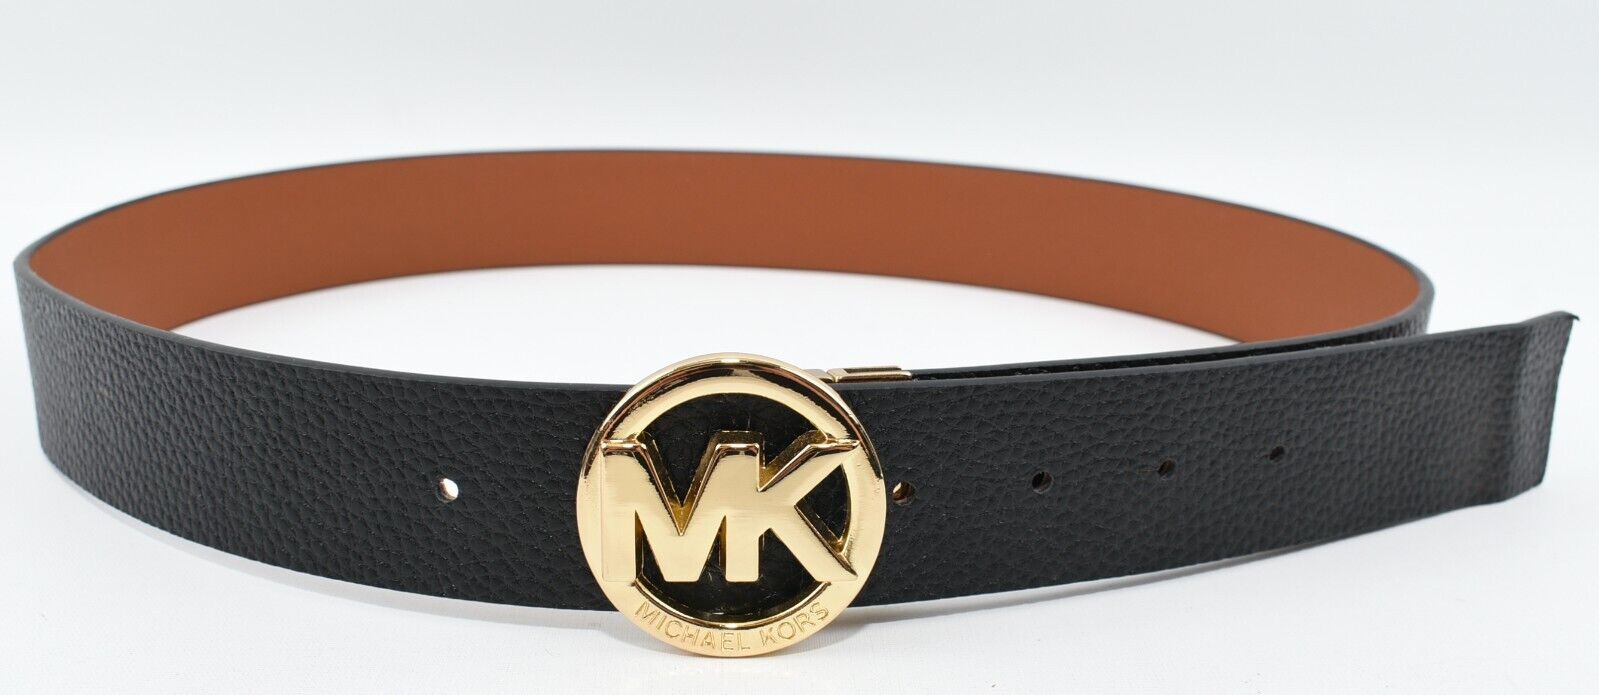 MICHAEL KORS Womens Gold Buckle Reversible Belt, Black/Brown, size L